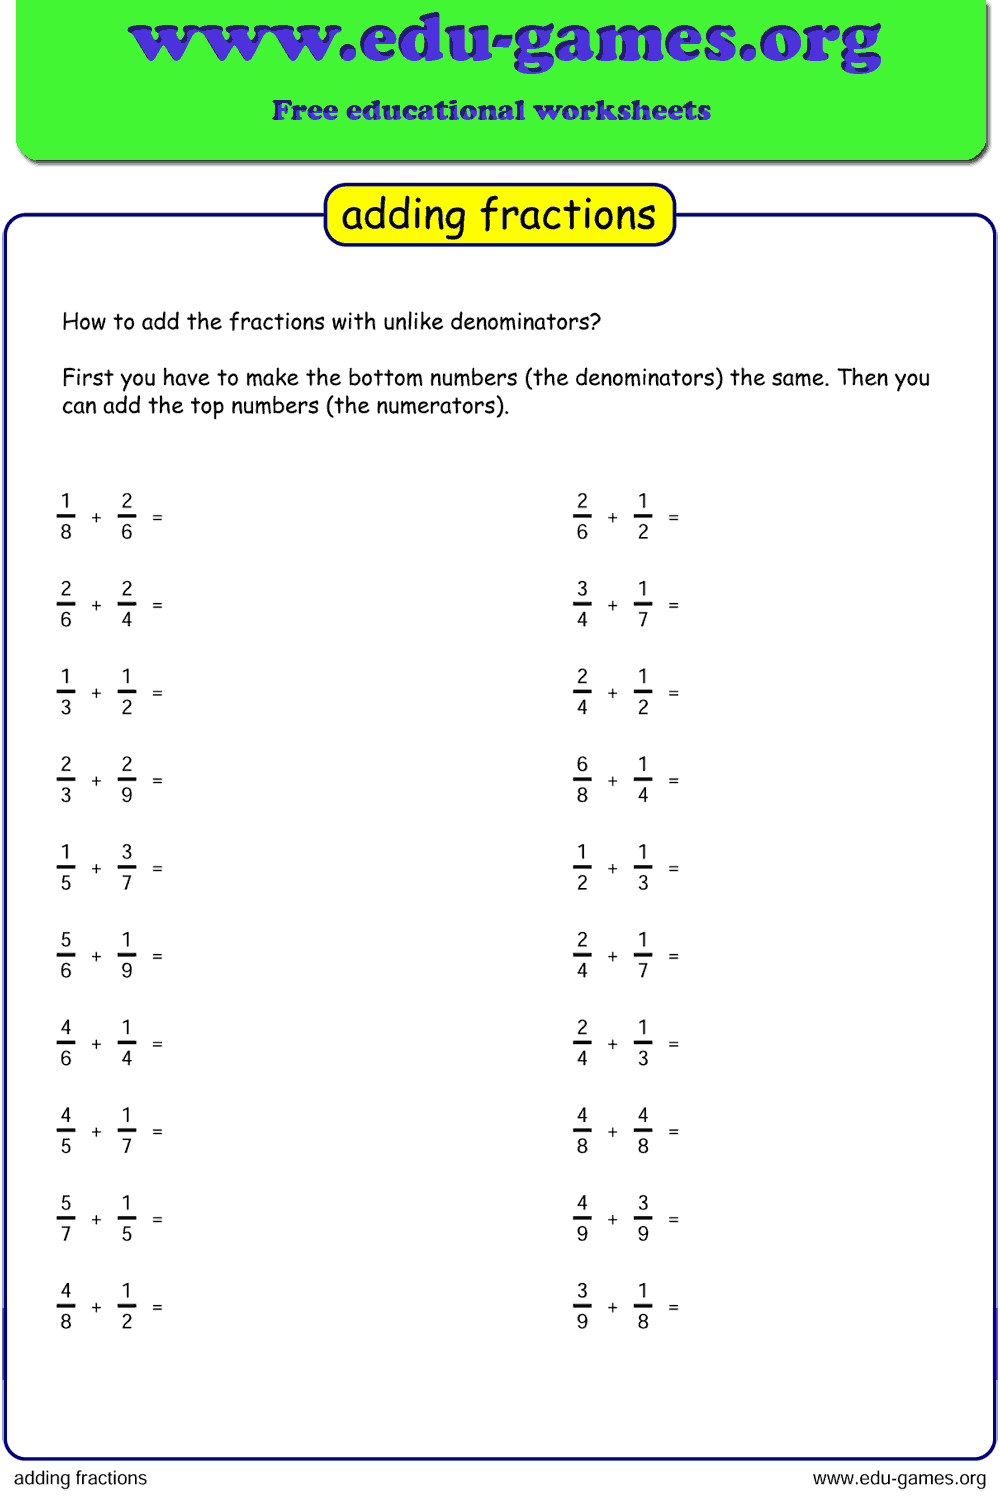 adding-fractions-with-same-denominator-worksheet